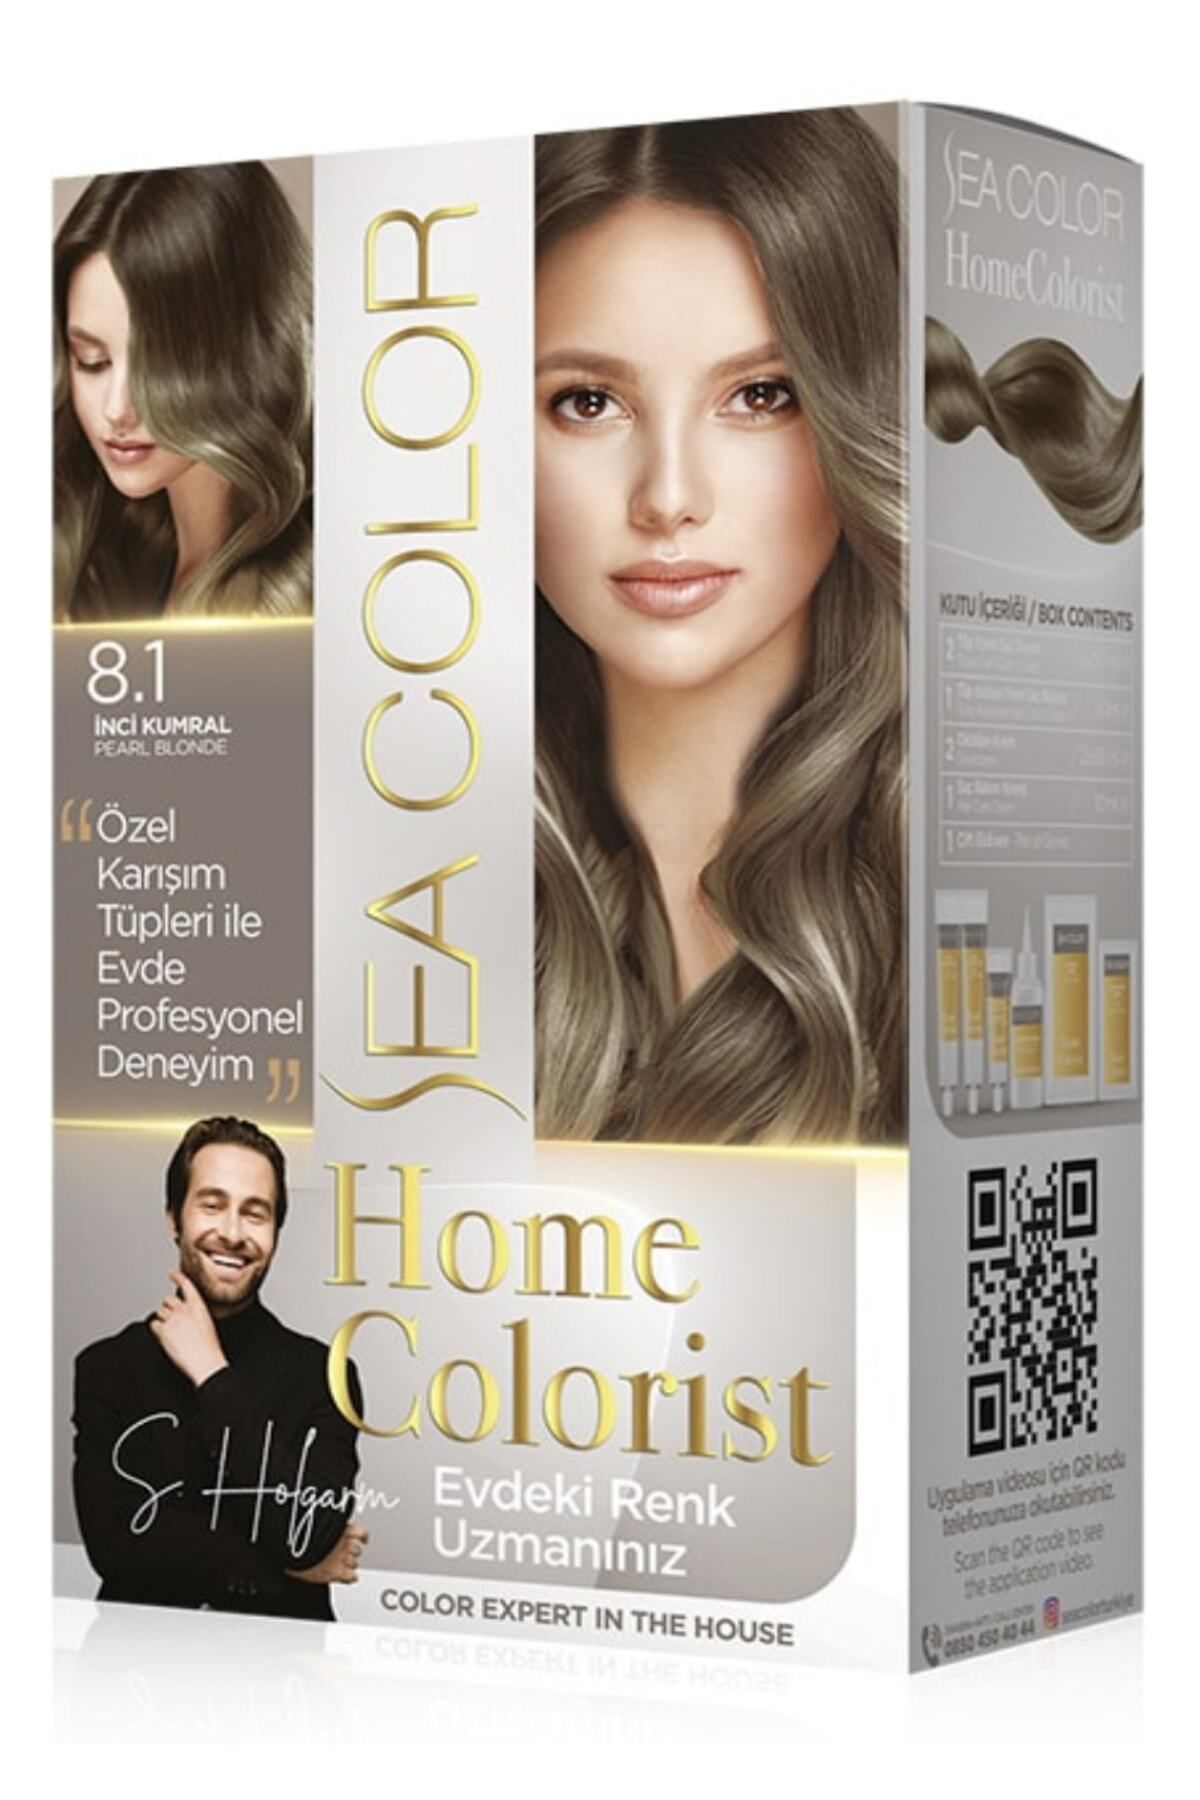 Sea Color Homecolorist 8.1 Inci Kumral Saç Boyası